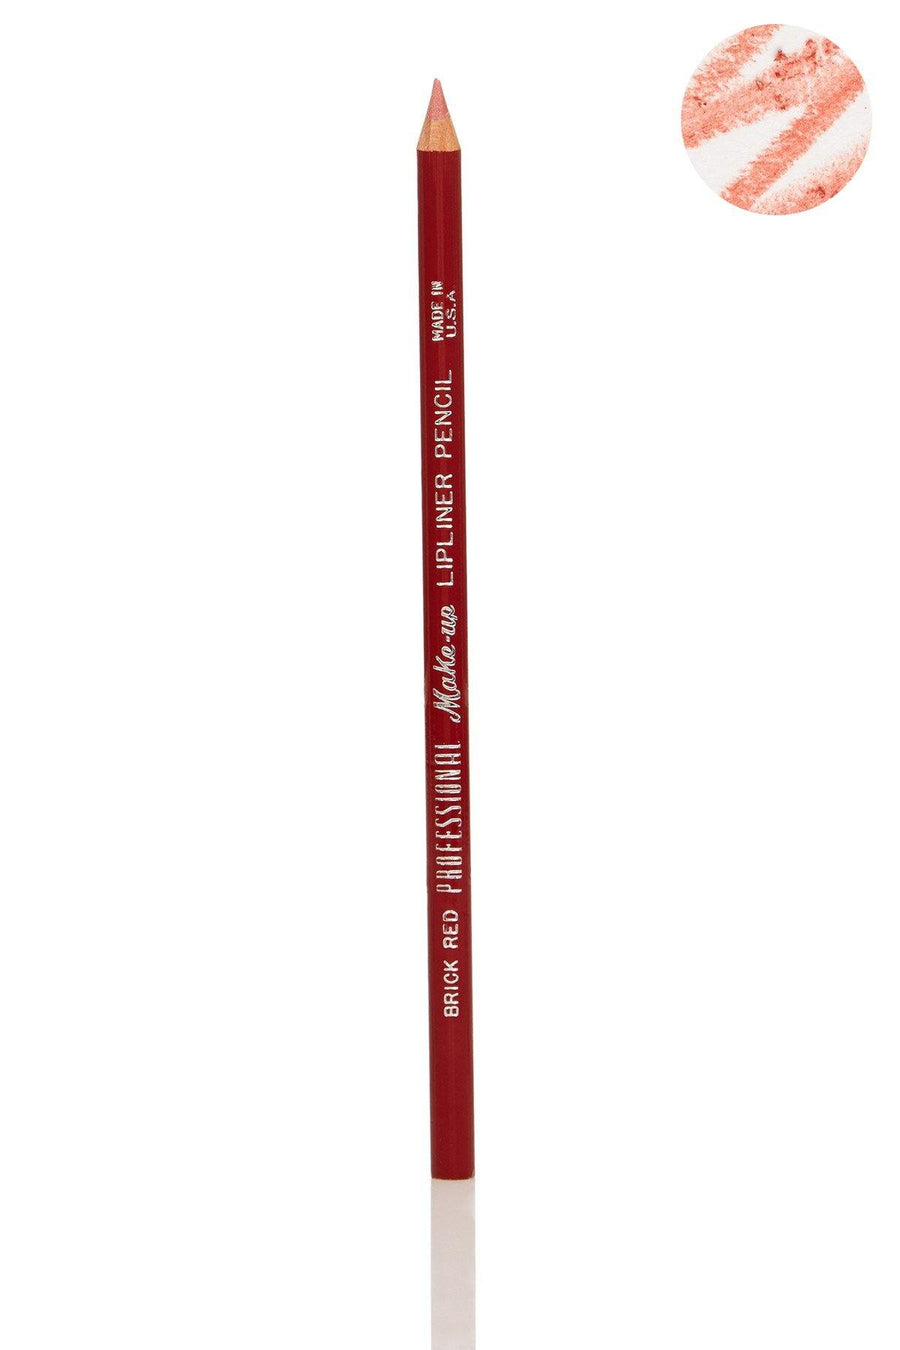 Brick Red Lipliner Pencil - Blend Mineral Cosmetics